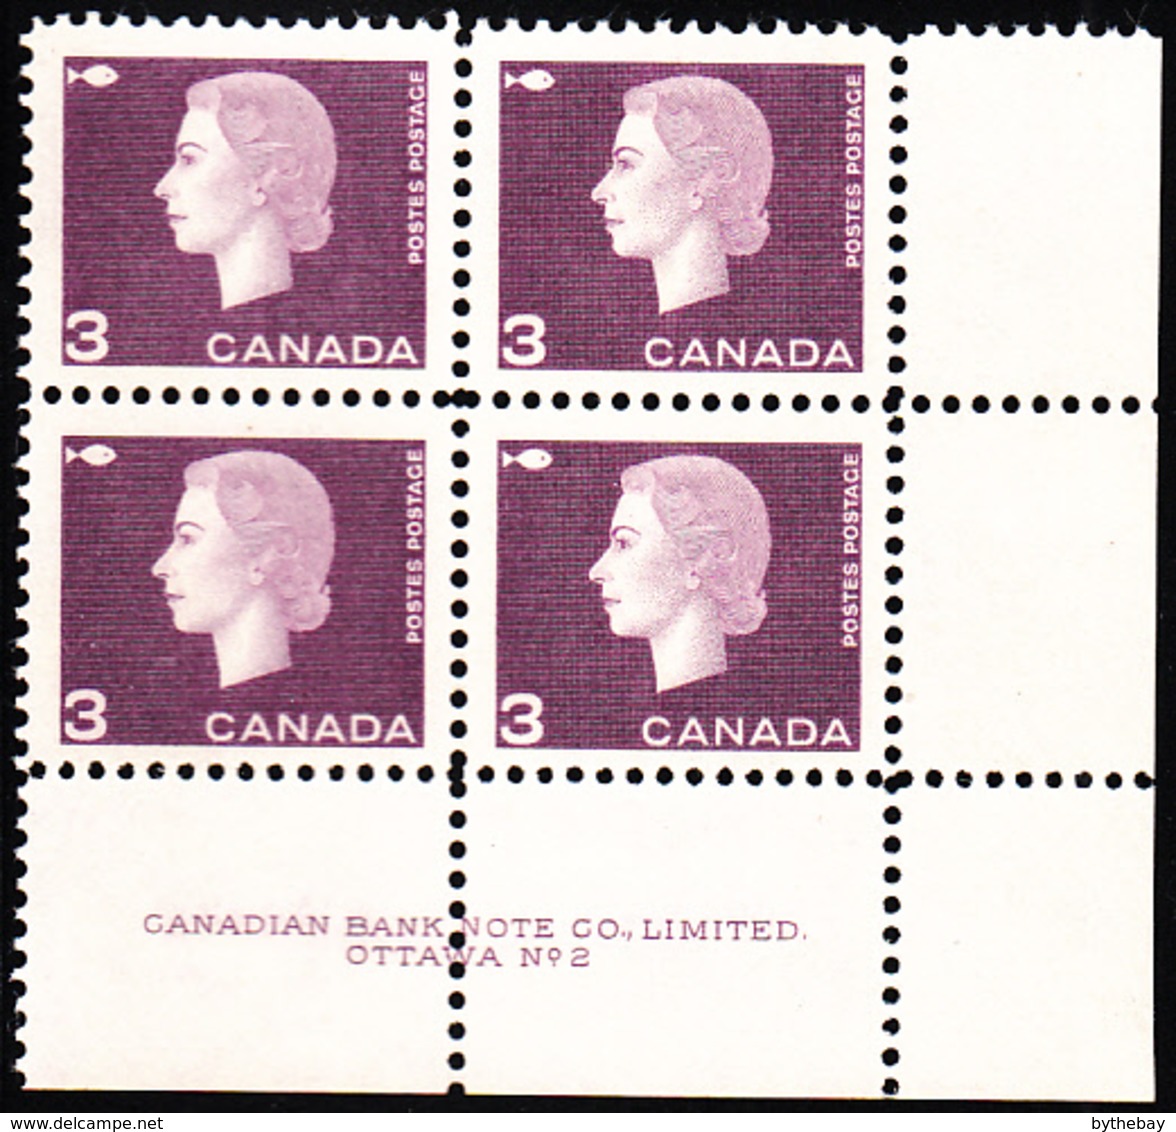 Canada 1963 MNH Sc #403 3c QEII Cameo Purple Plate #2 LR - Plate Number & Inscriptions